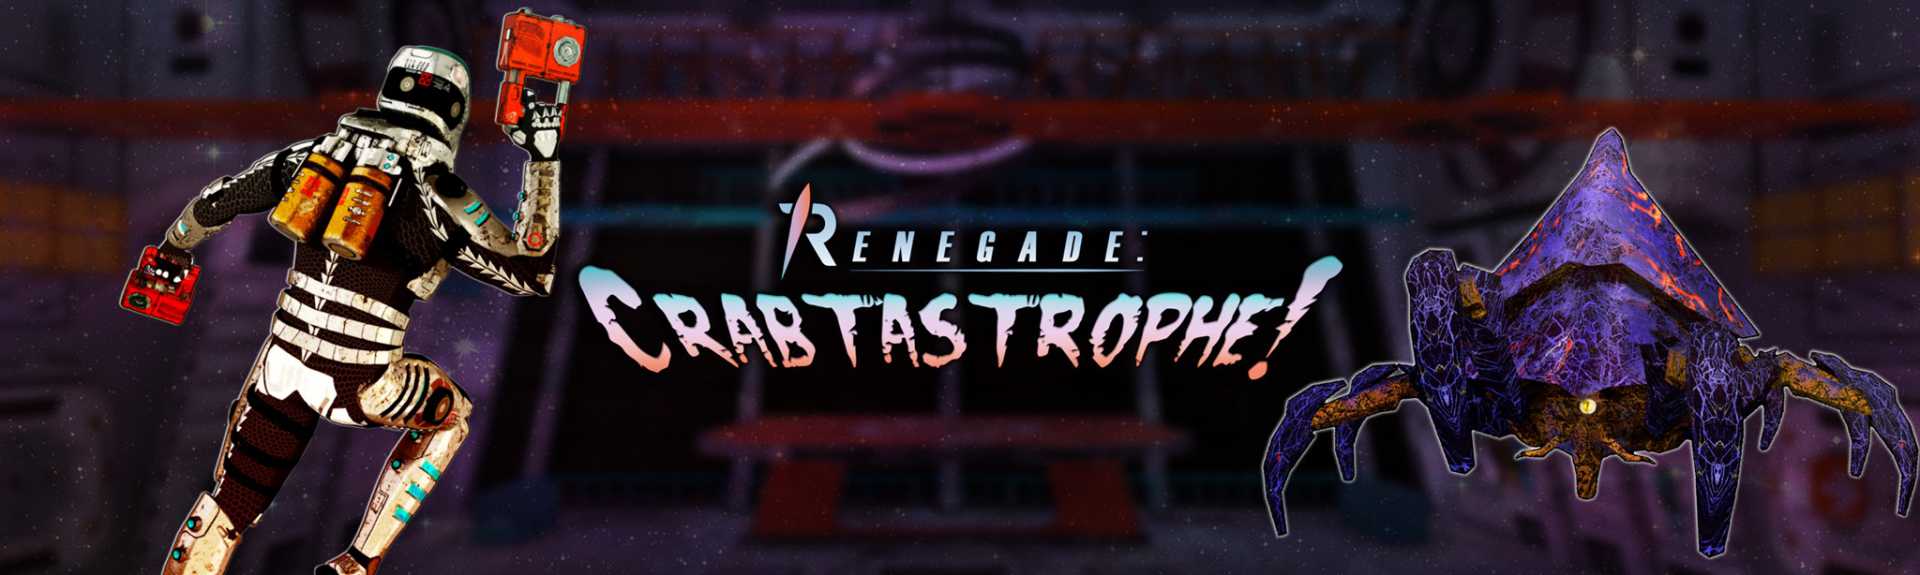 Renegade: Crabtastrophe!